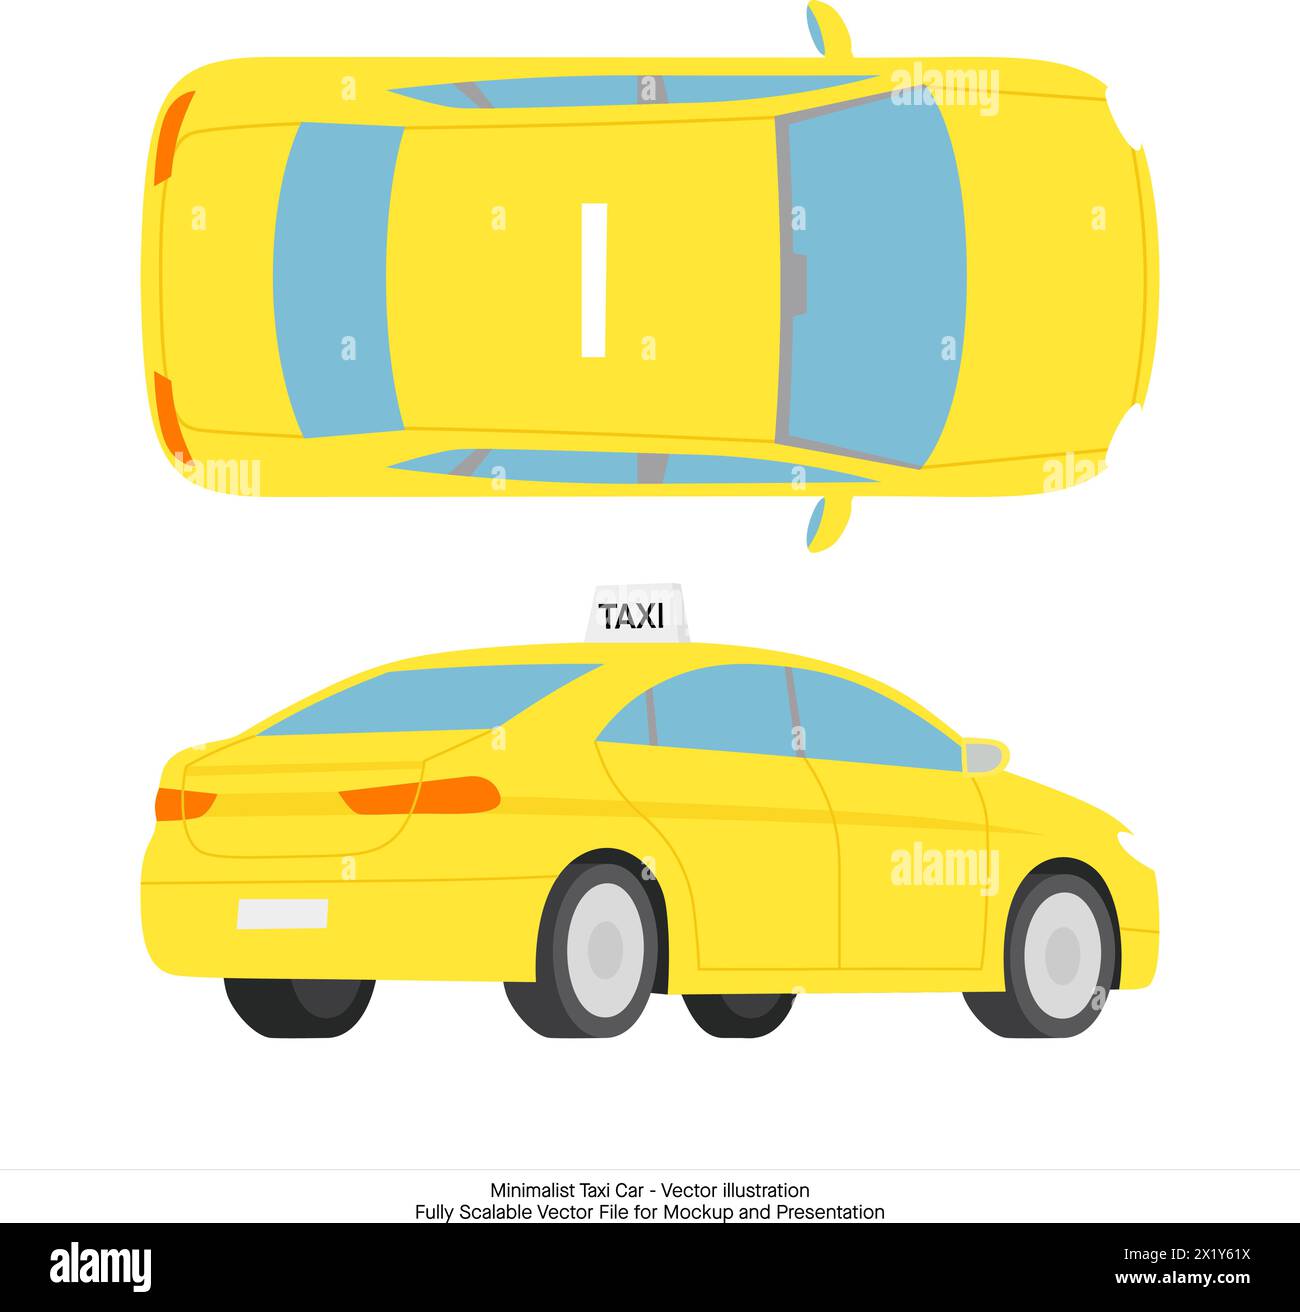 Minimalist Taxi Car Vector - Mockup and Presentation Ready Stock Vector